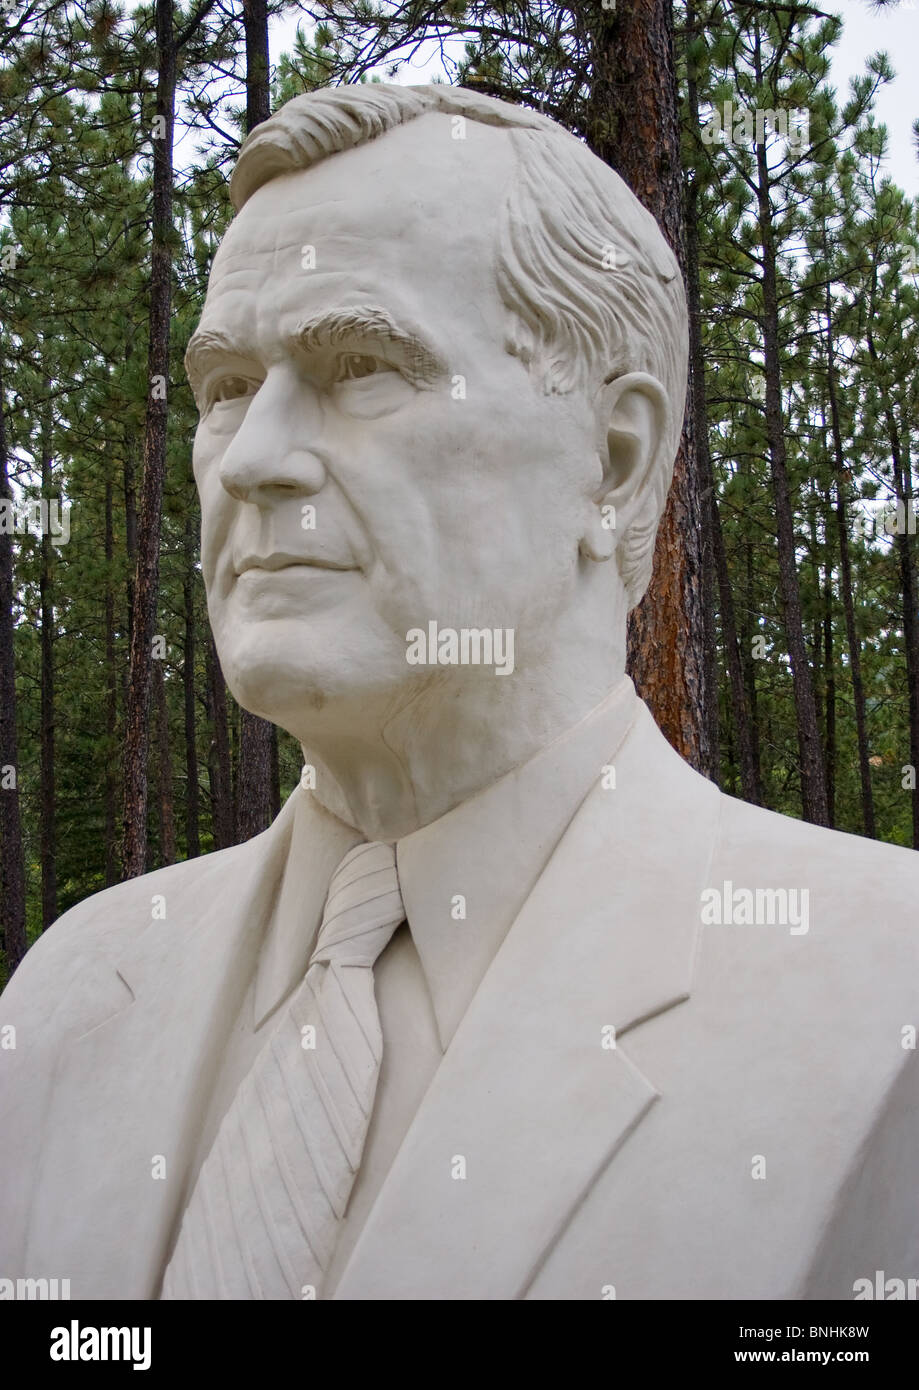 George H. W. Bush bust by sculptor David Adickes at Presidents Park in Lead South Dakota Stock Photo